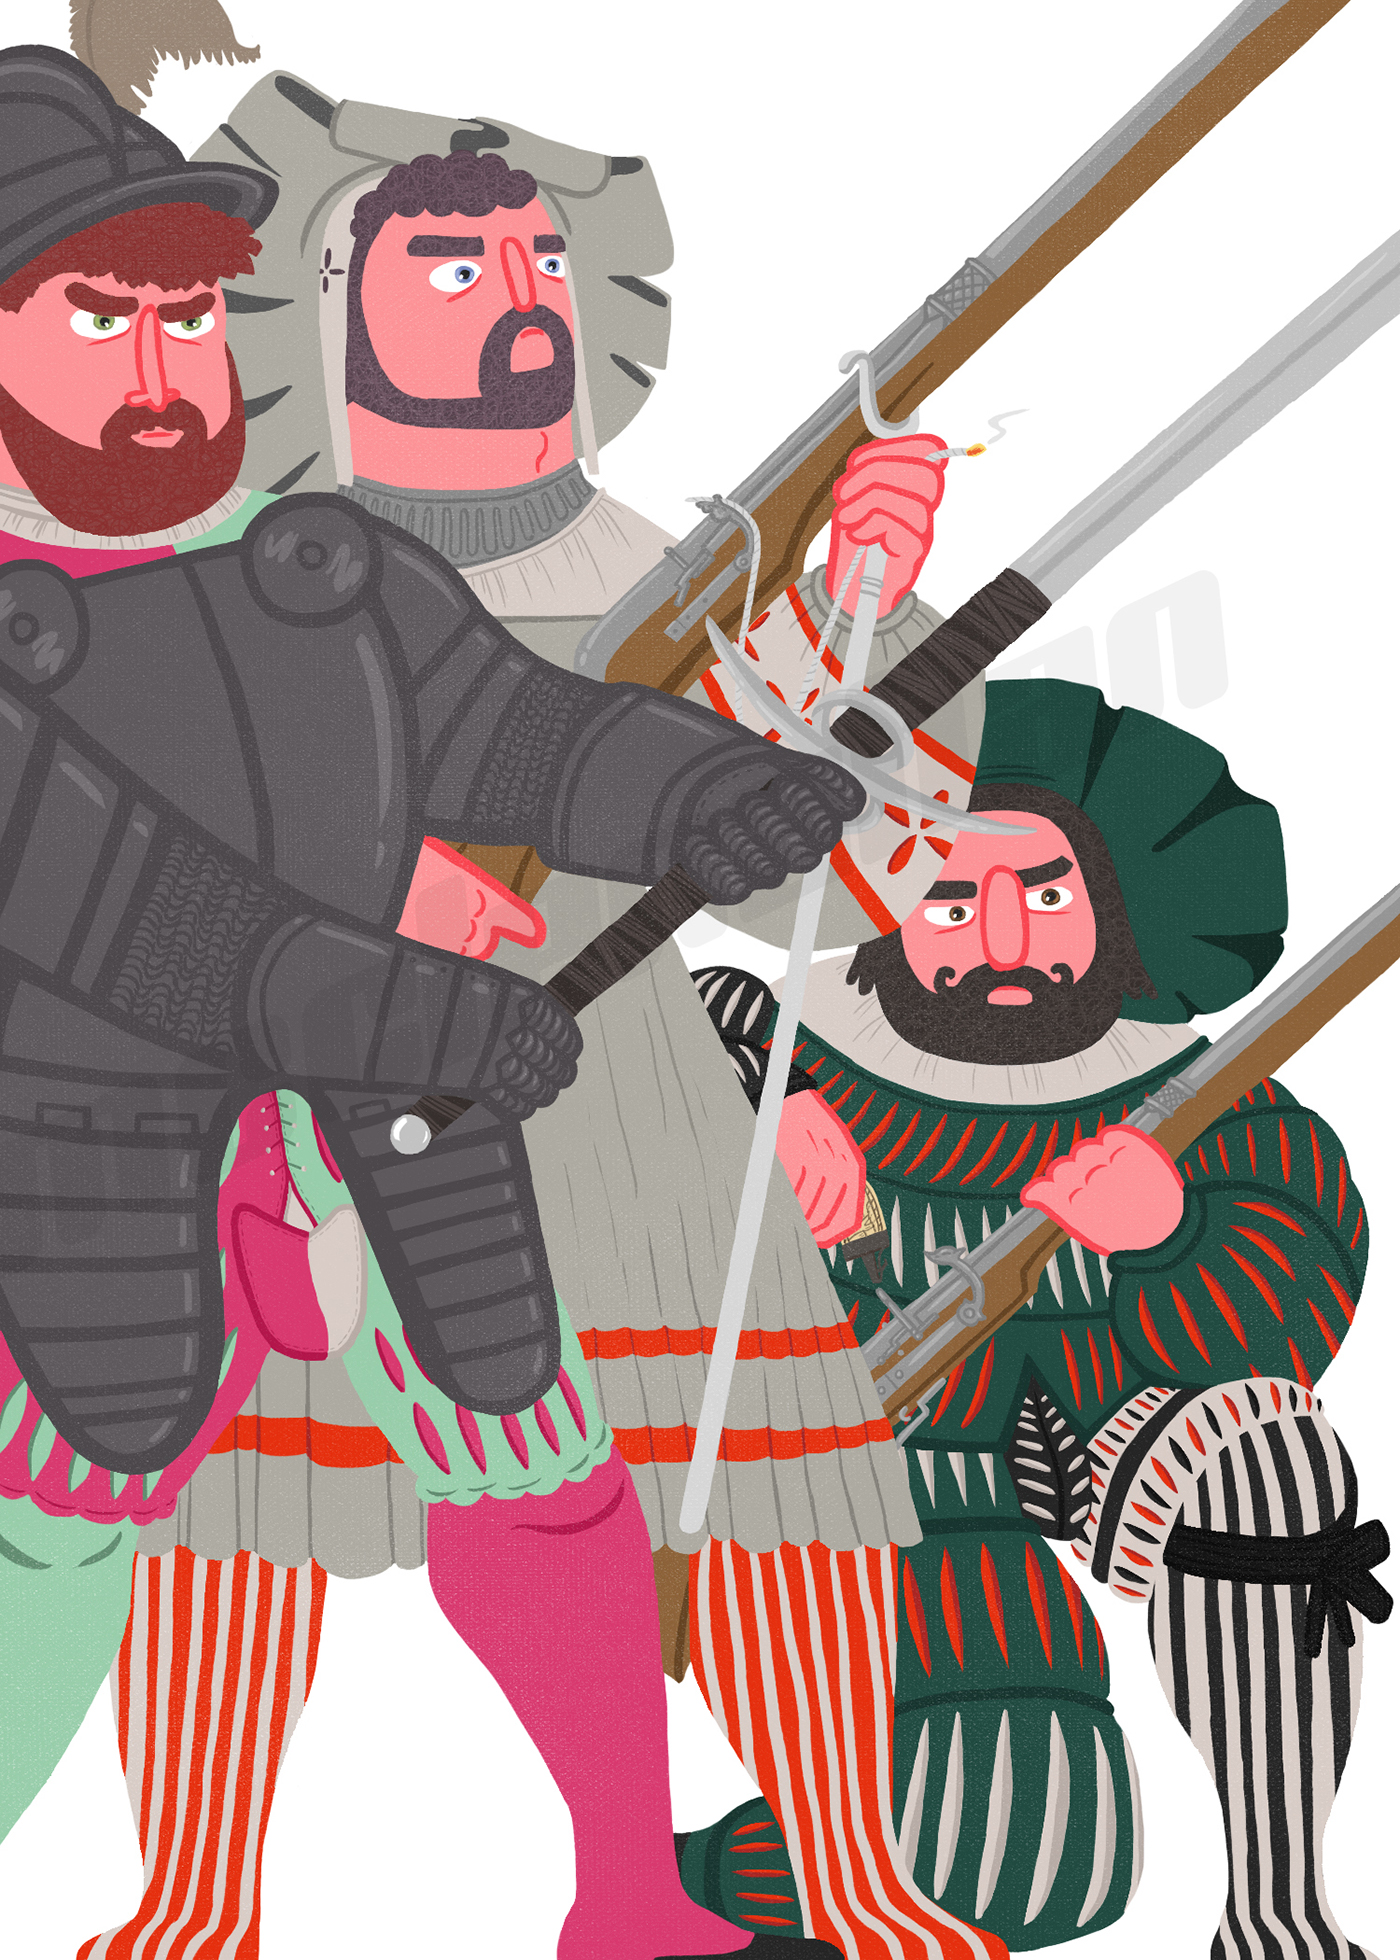 knights longsword fights russian cats